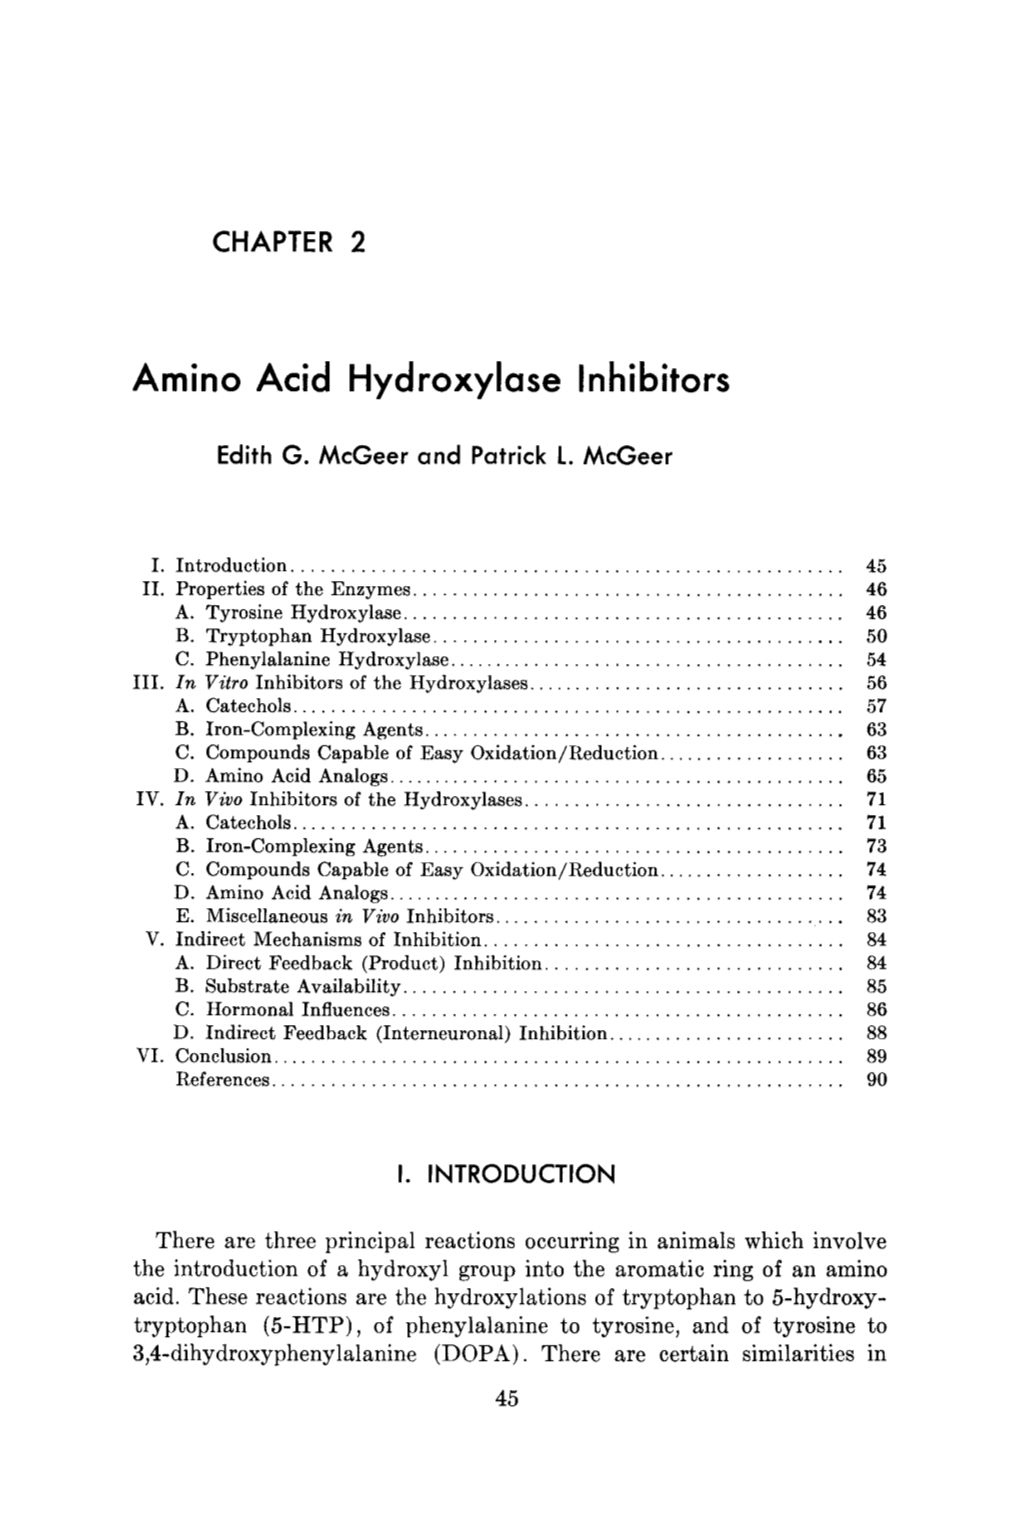 Amino Acid Hydroxylase Inhibitors